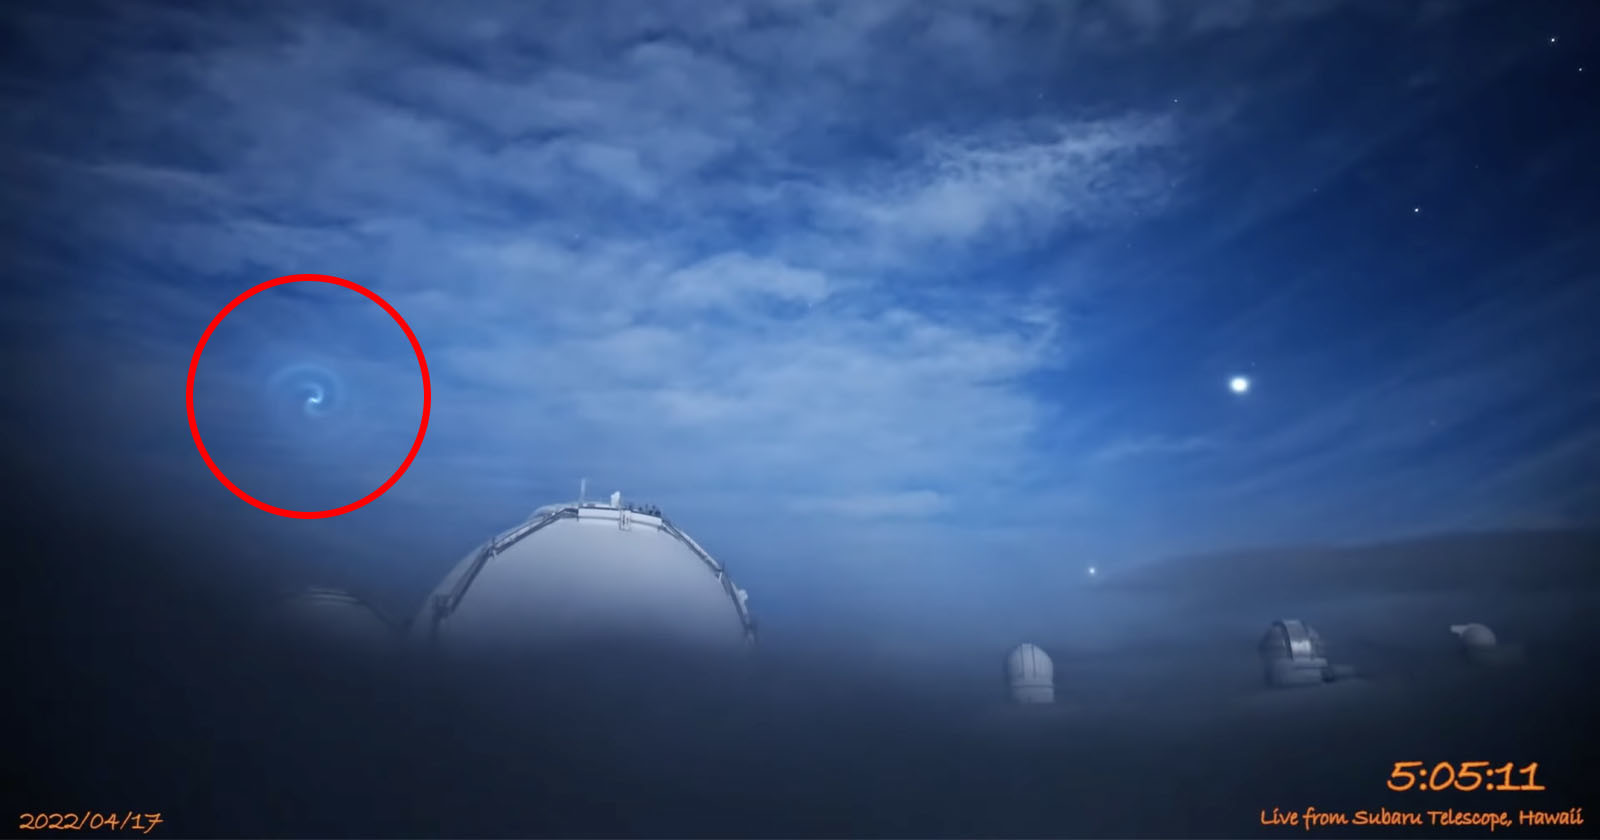 Strange Flying Whirlpool in Hawaiis Night Sky Caused by SpaceX Rocket